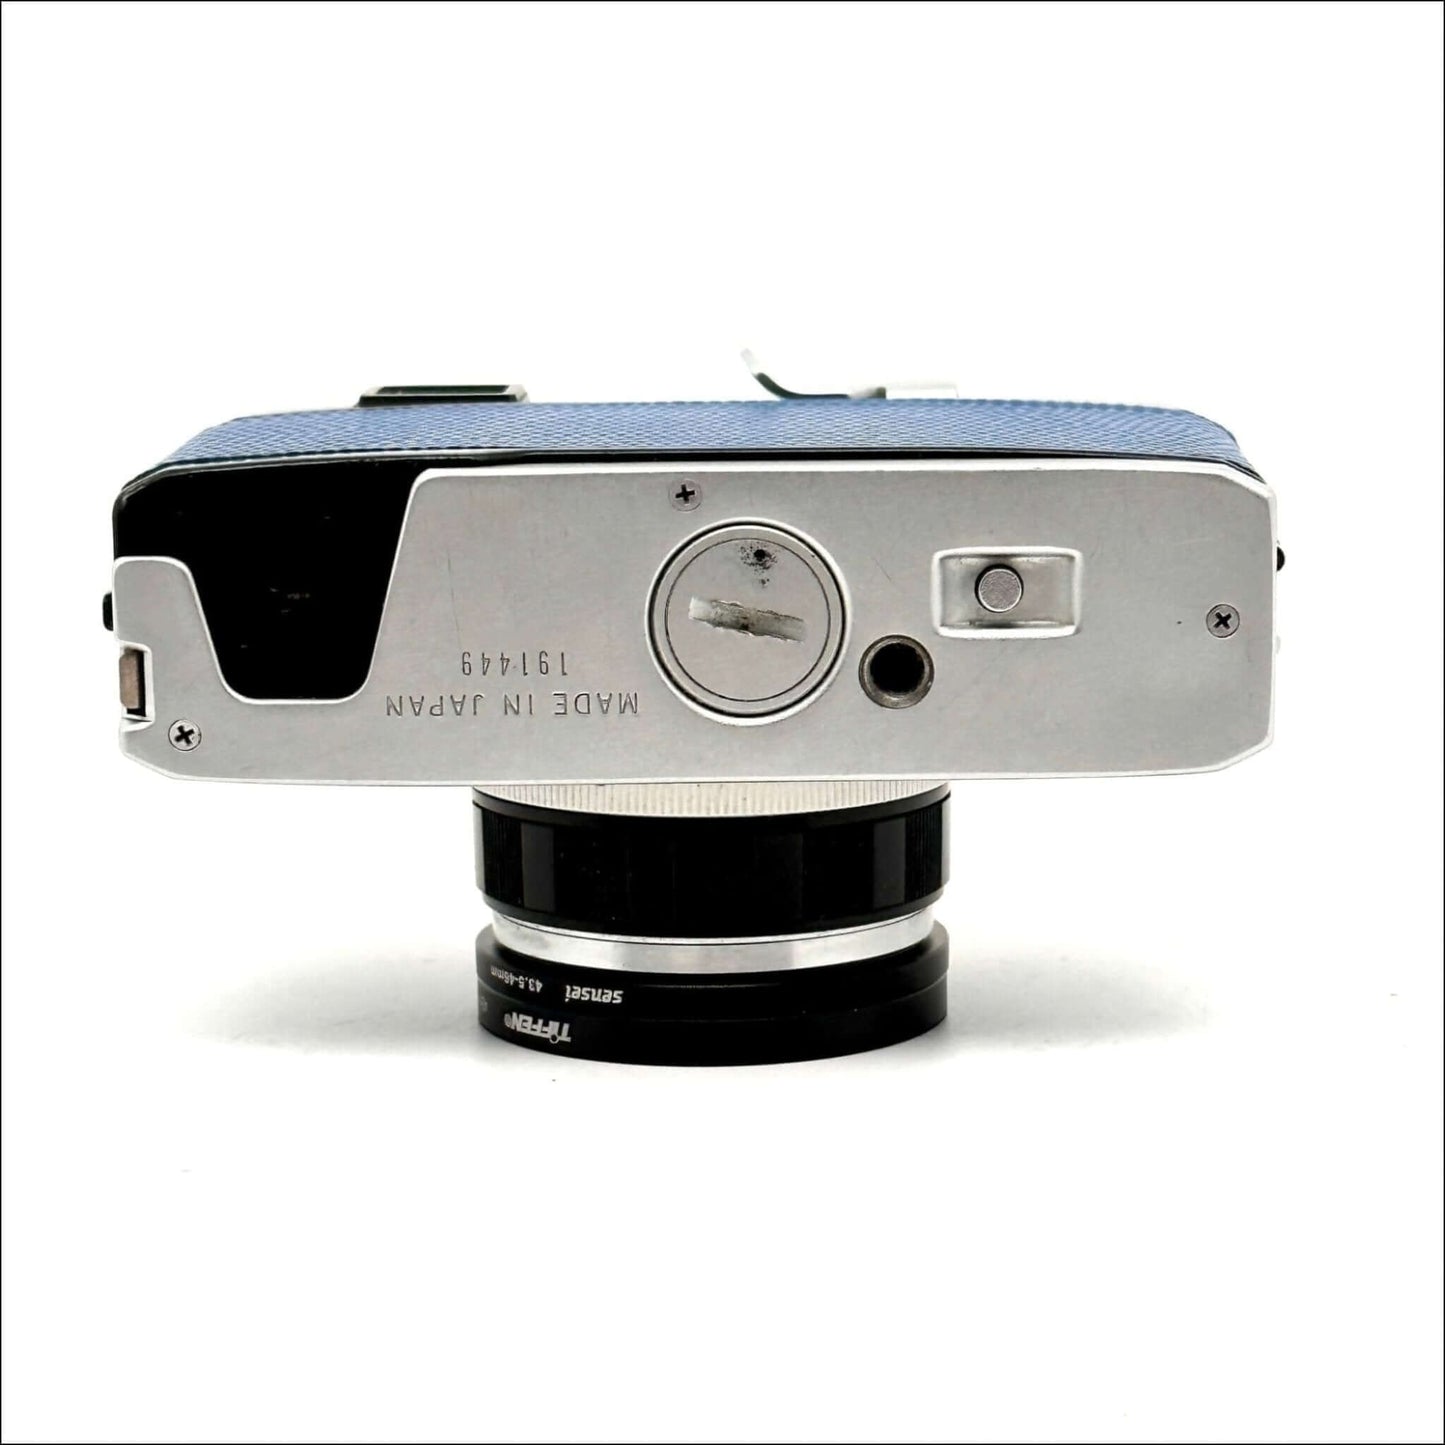 Olympus 35 Rc 35mm Used Blue Rangefinder Film Camera